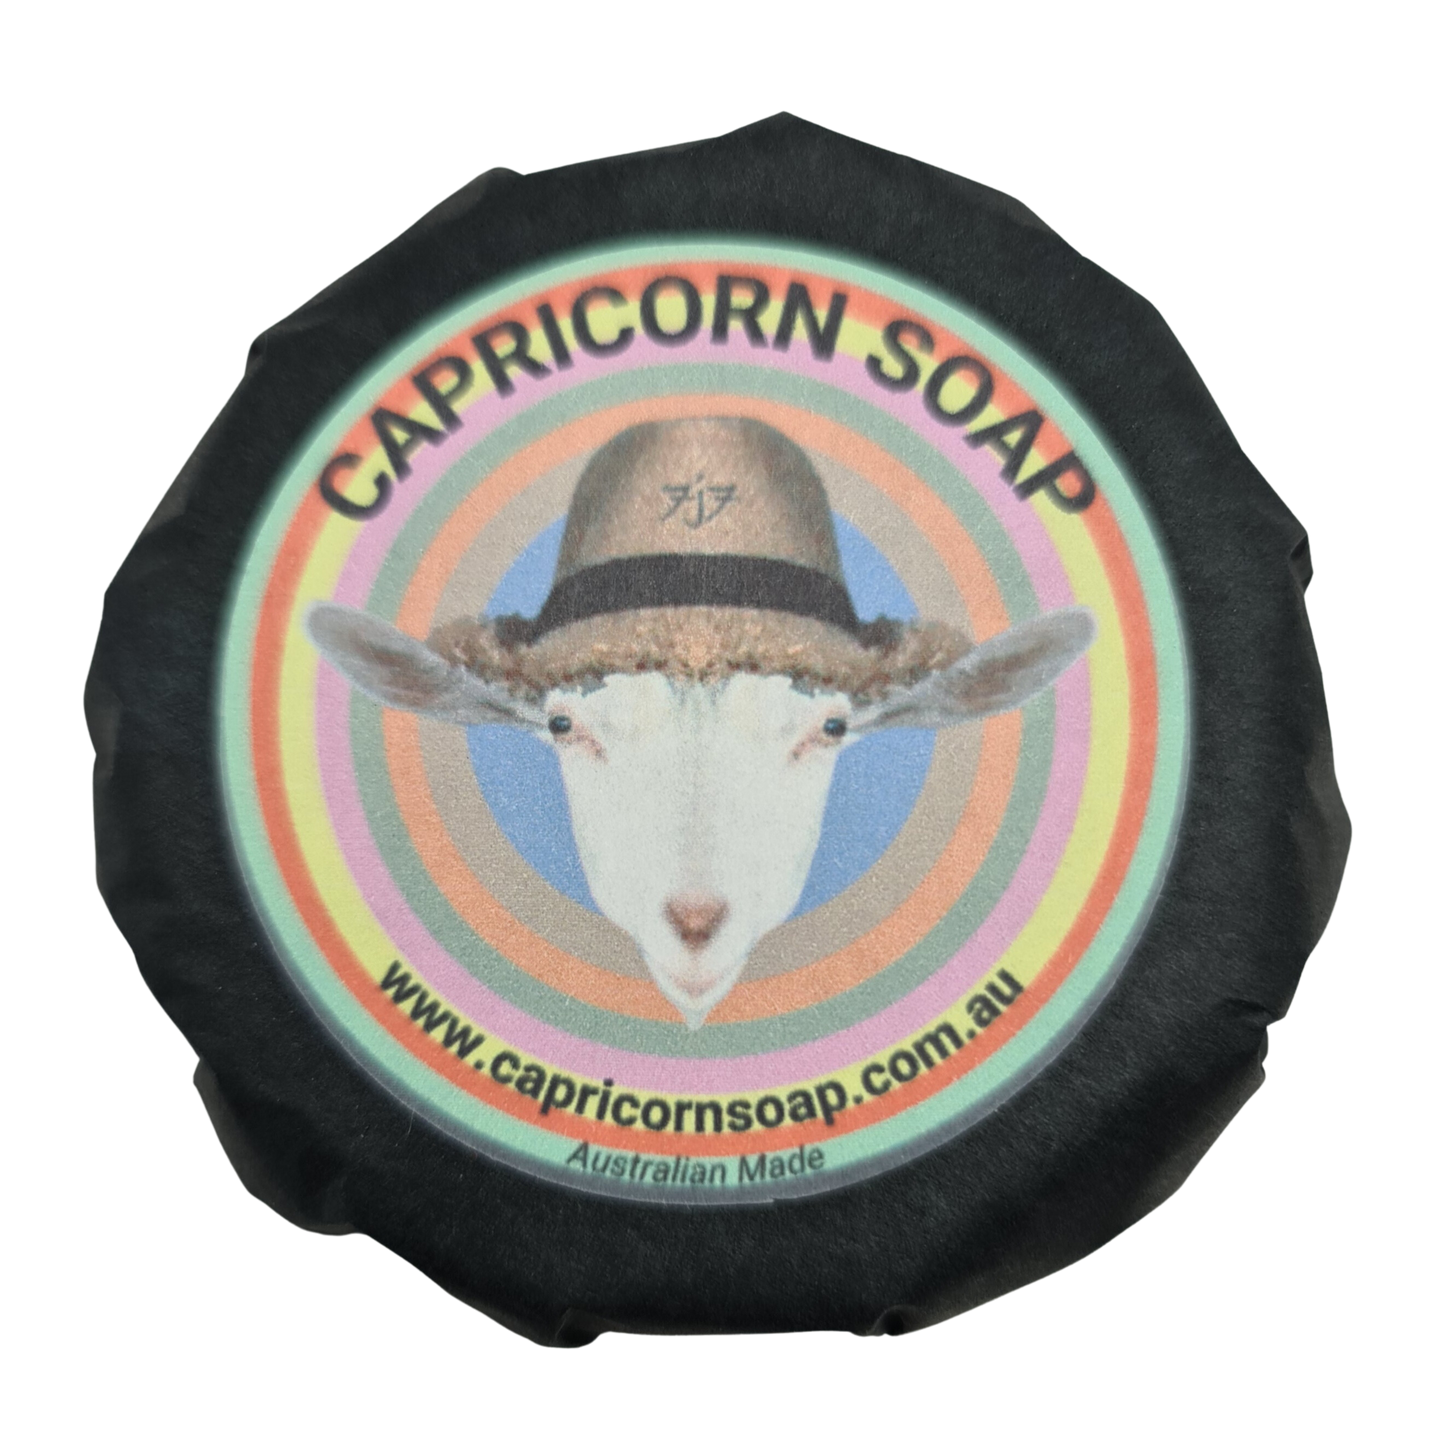 Capricorn Soap - Goat Milk Bar Soap